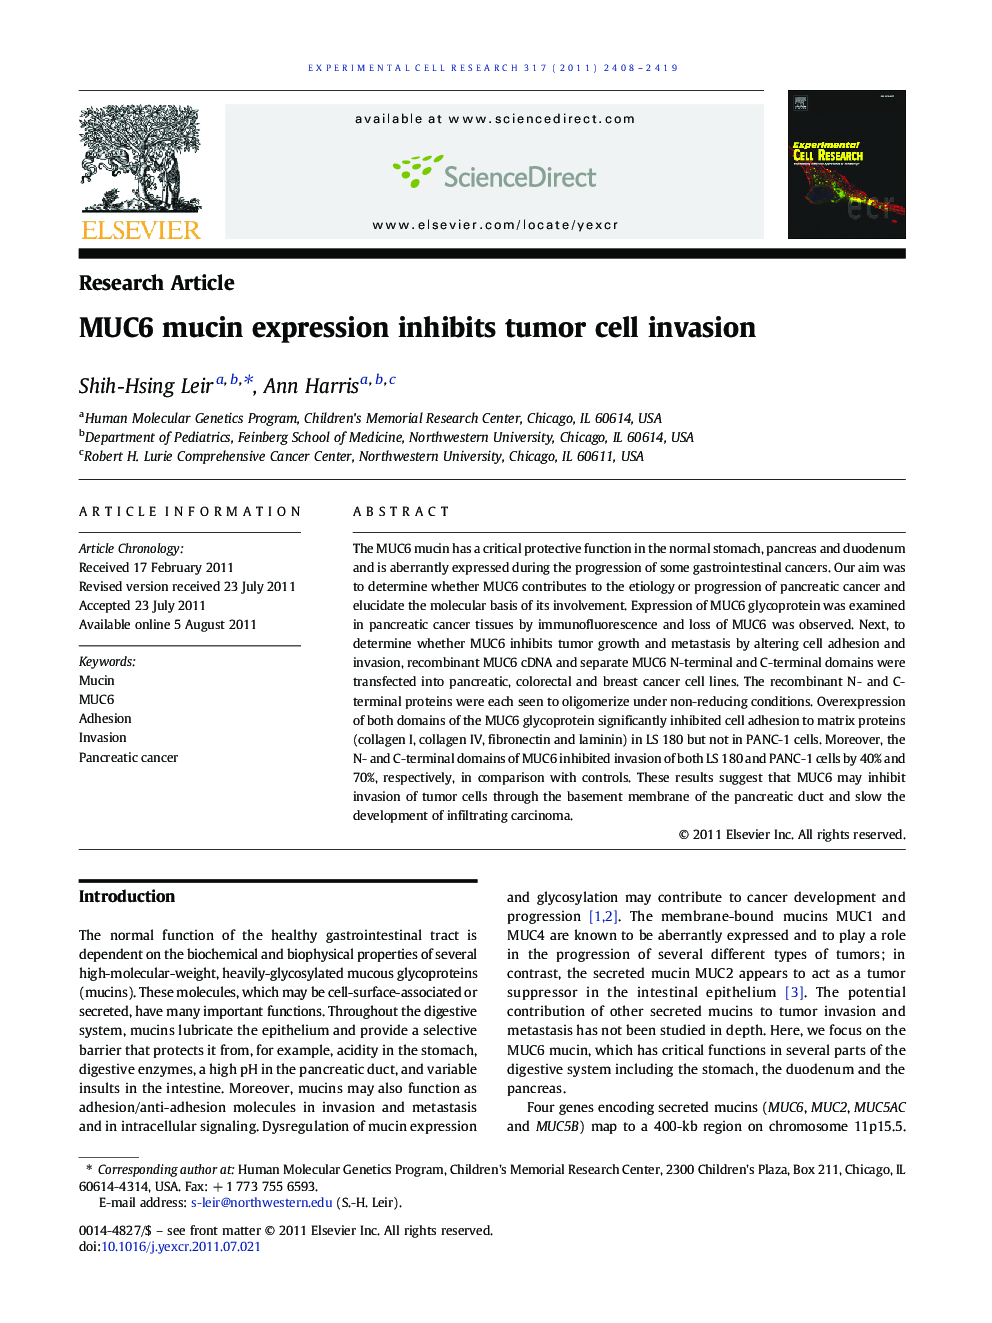 MUC6 mucin expression inhibits tumor cell invasion